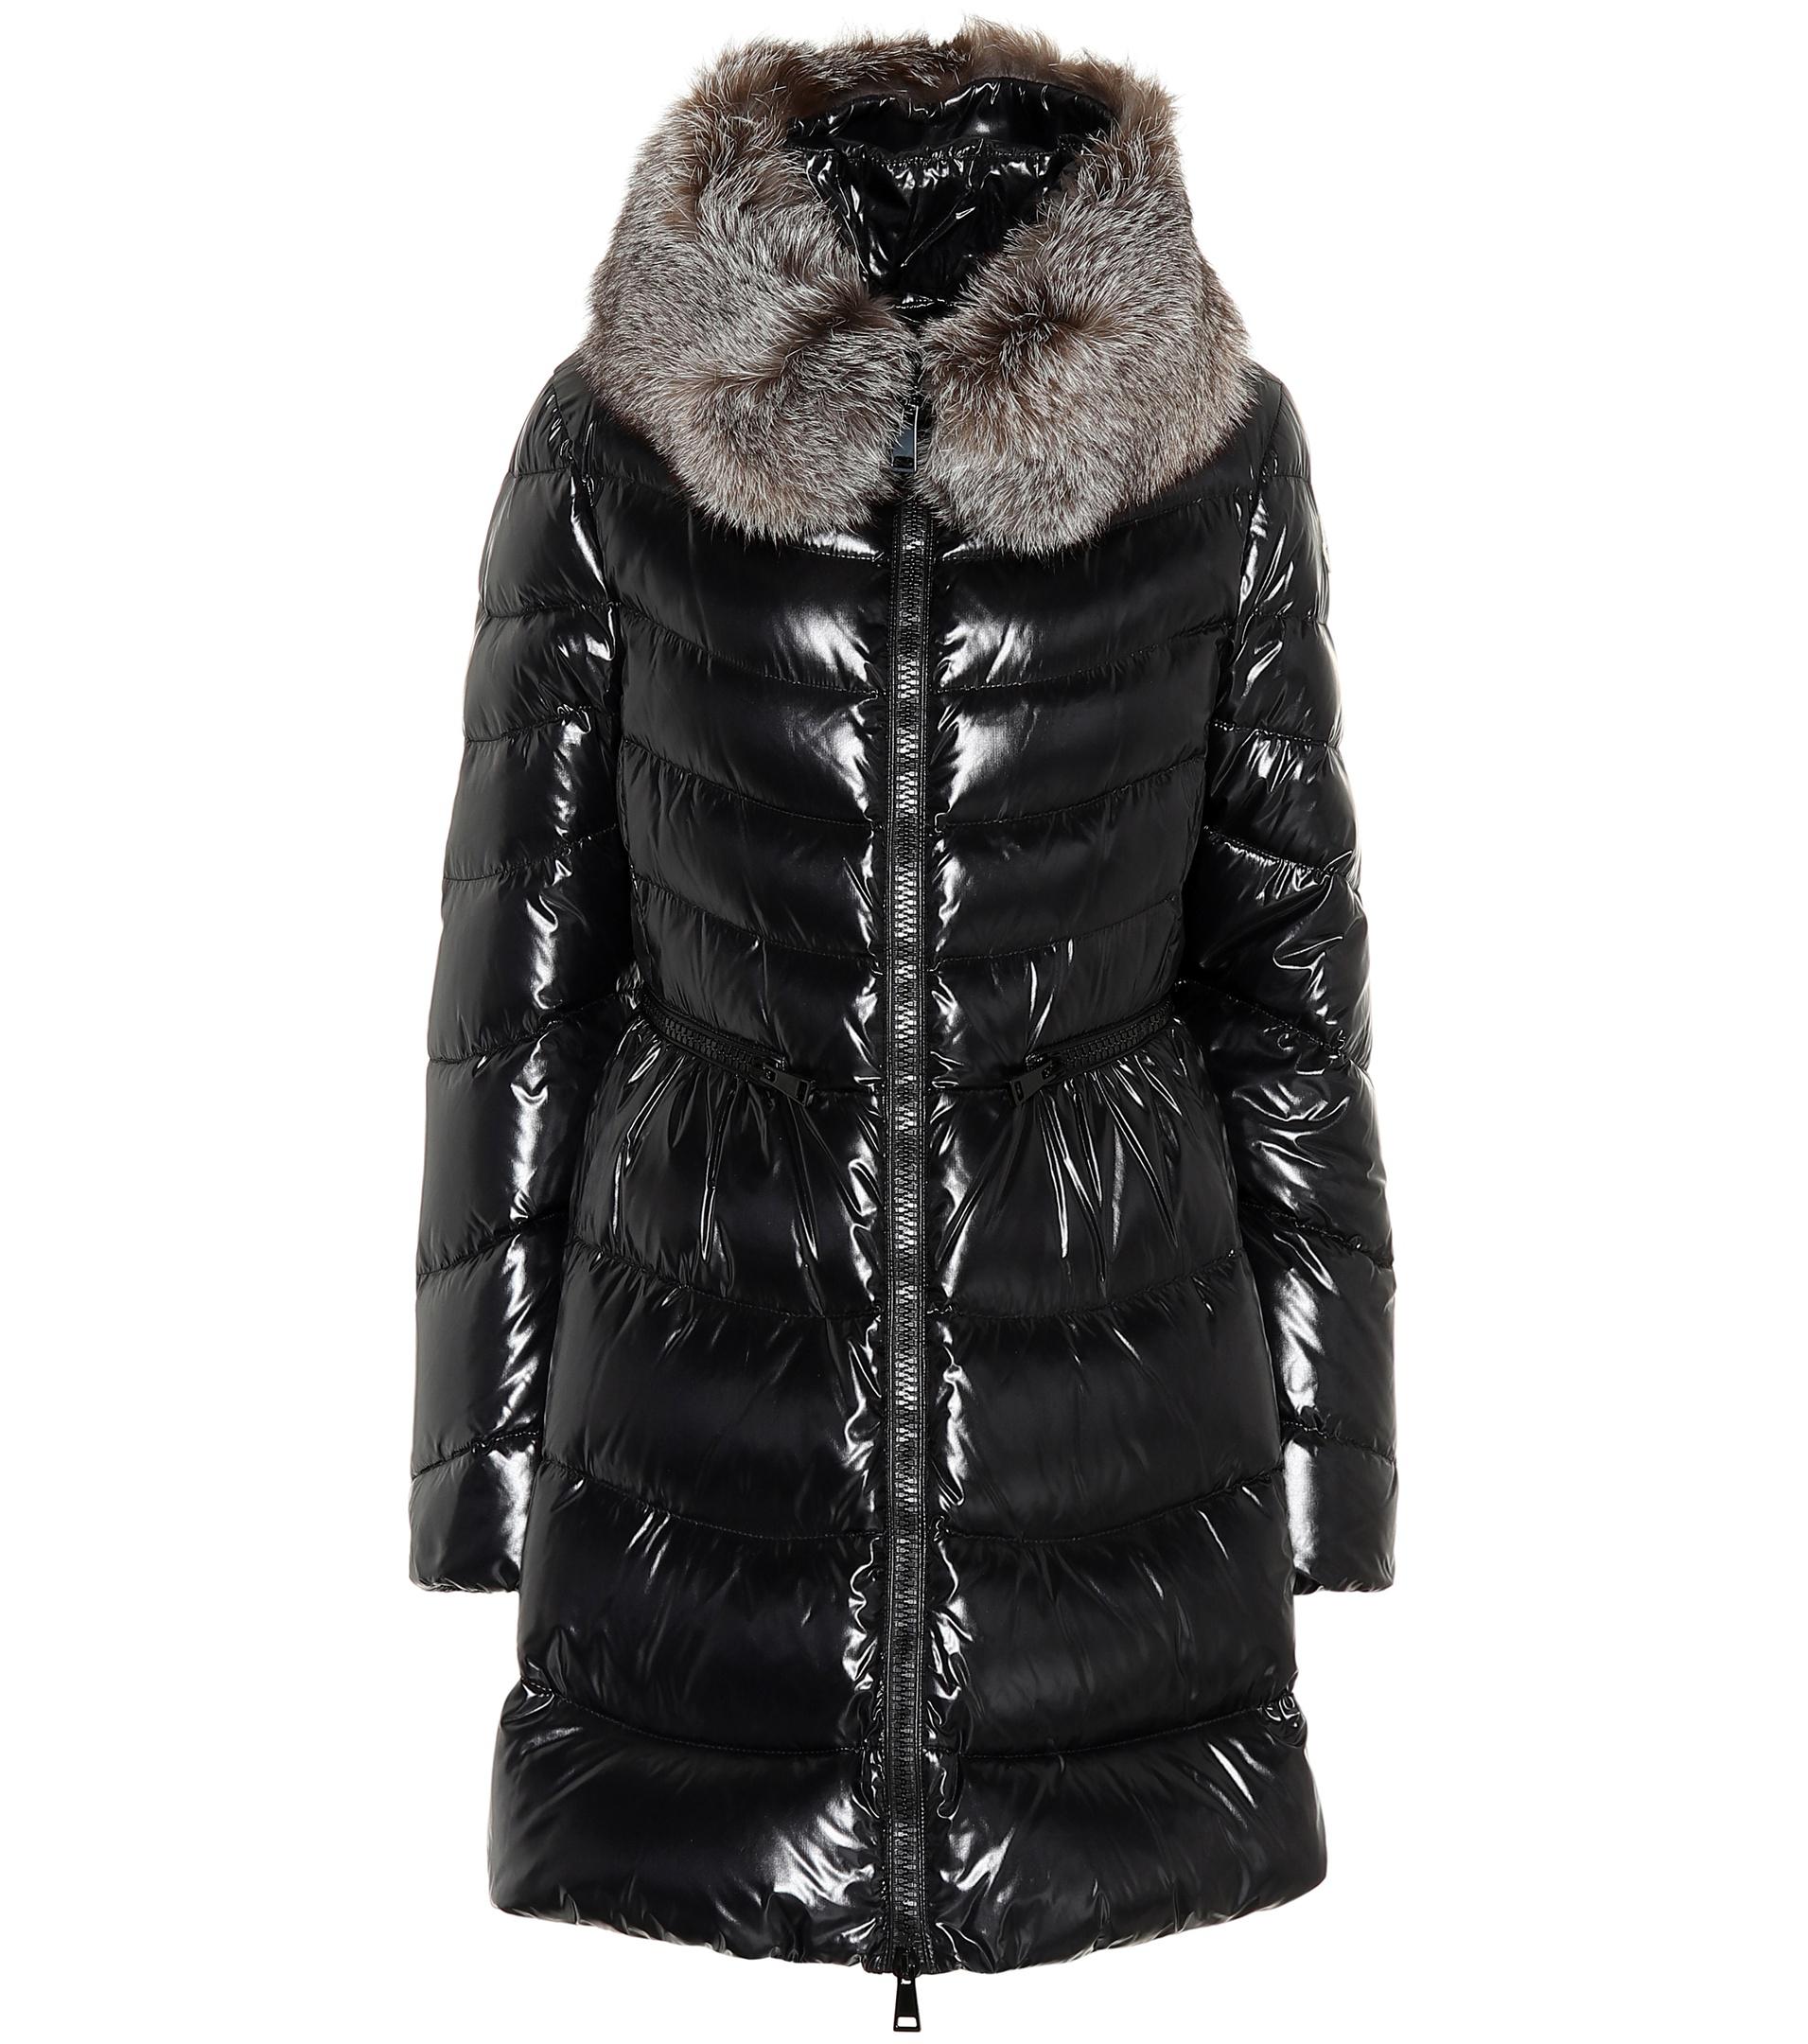 Moncler Mirielon Fur-trimmed Down Coat in Black - Lyst